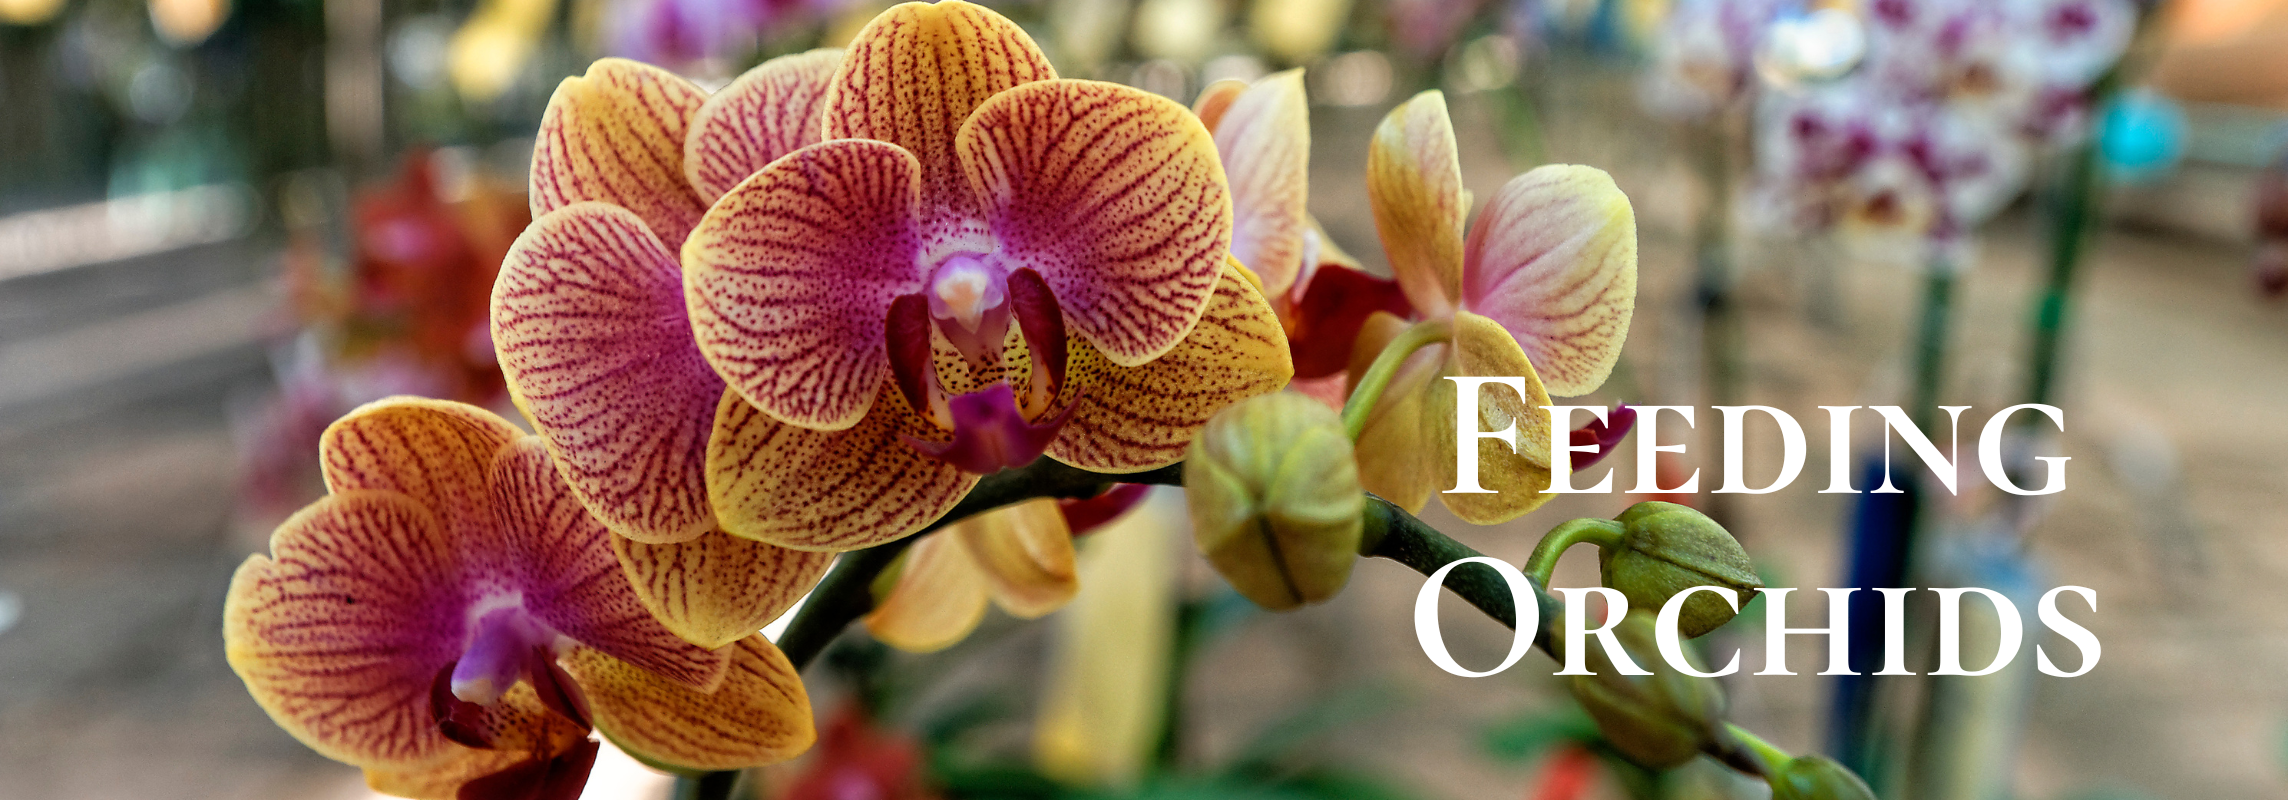 feeding orchids